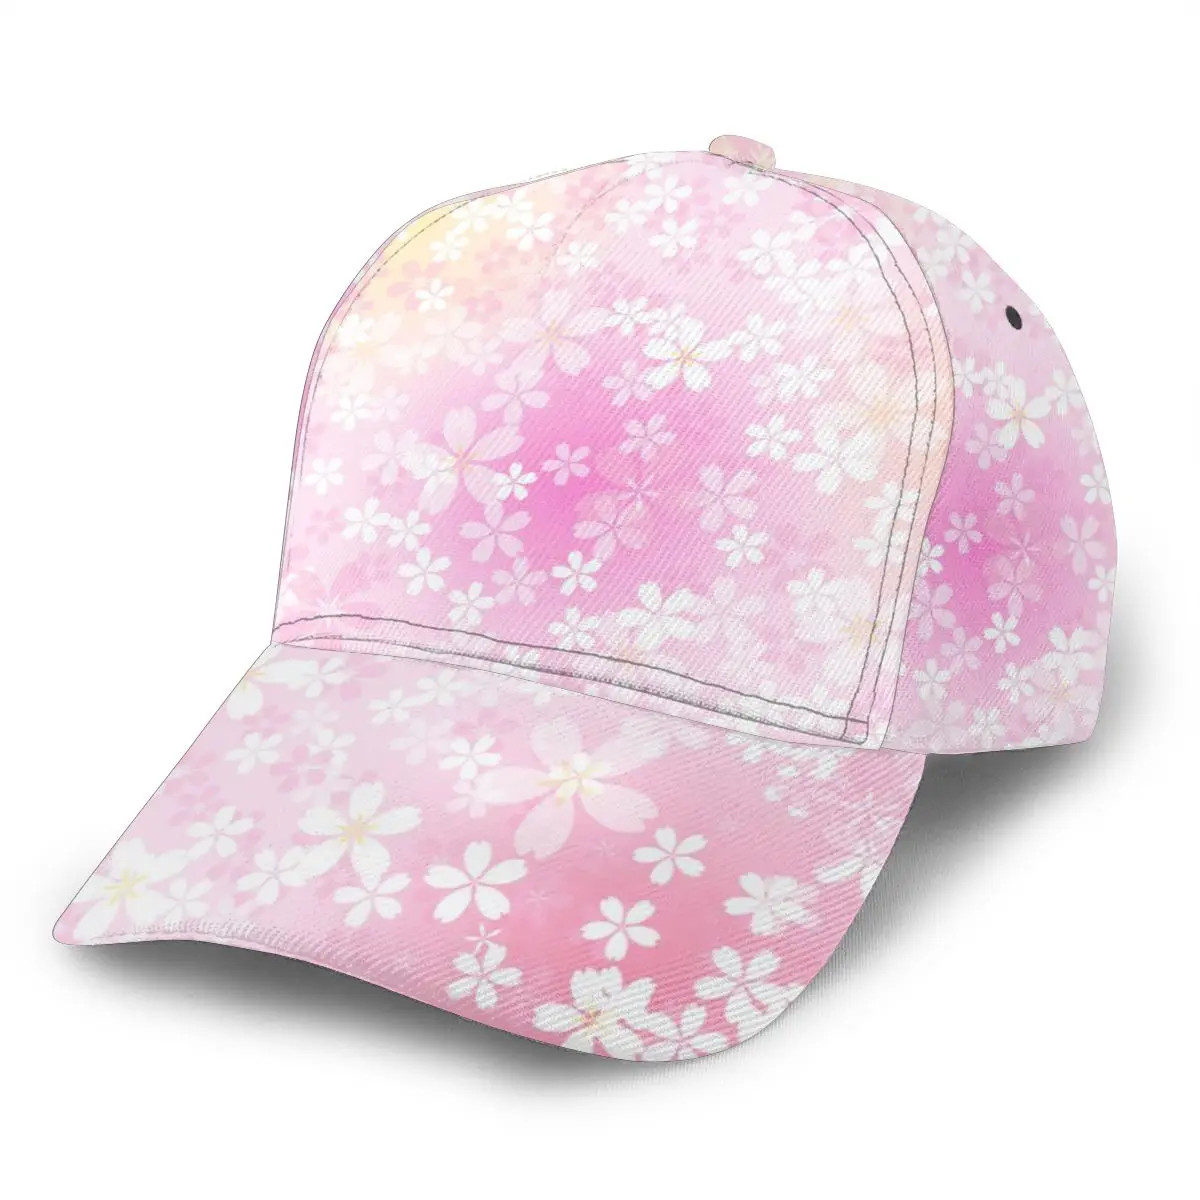 

CINESSD Cherry Blossom Pink Baseball Cap women men snapback caps Classic Style hat Casual Sport Outdoor cap